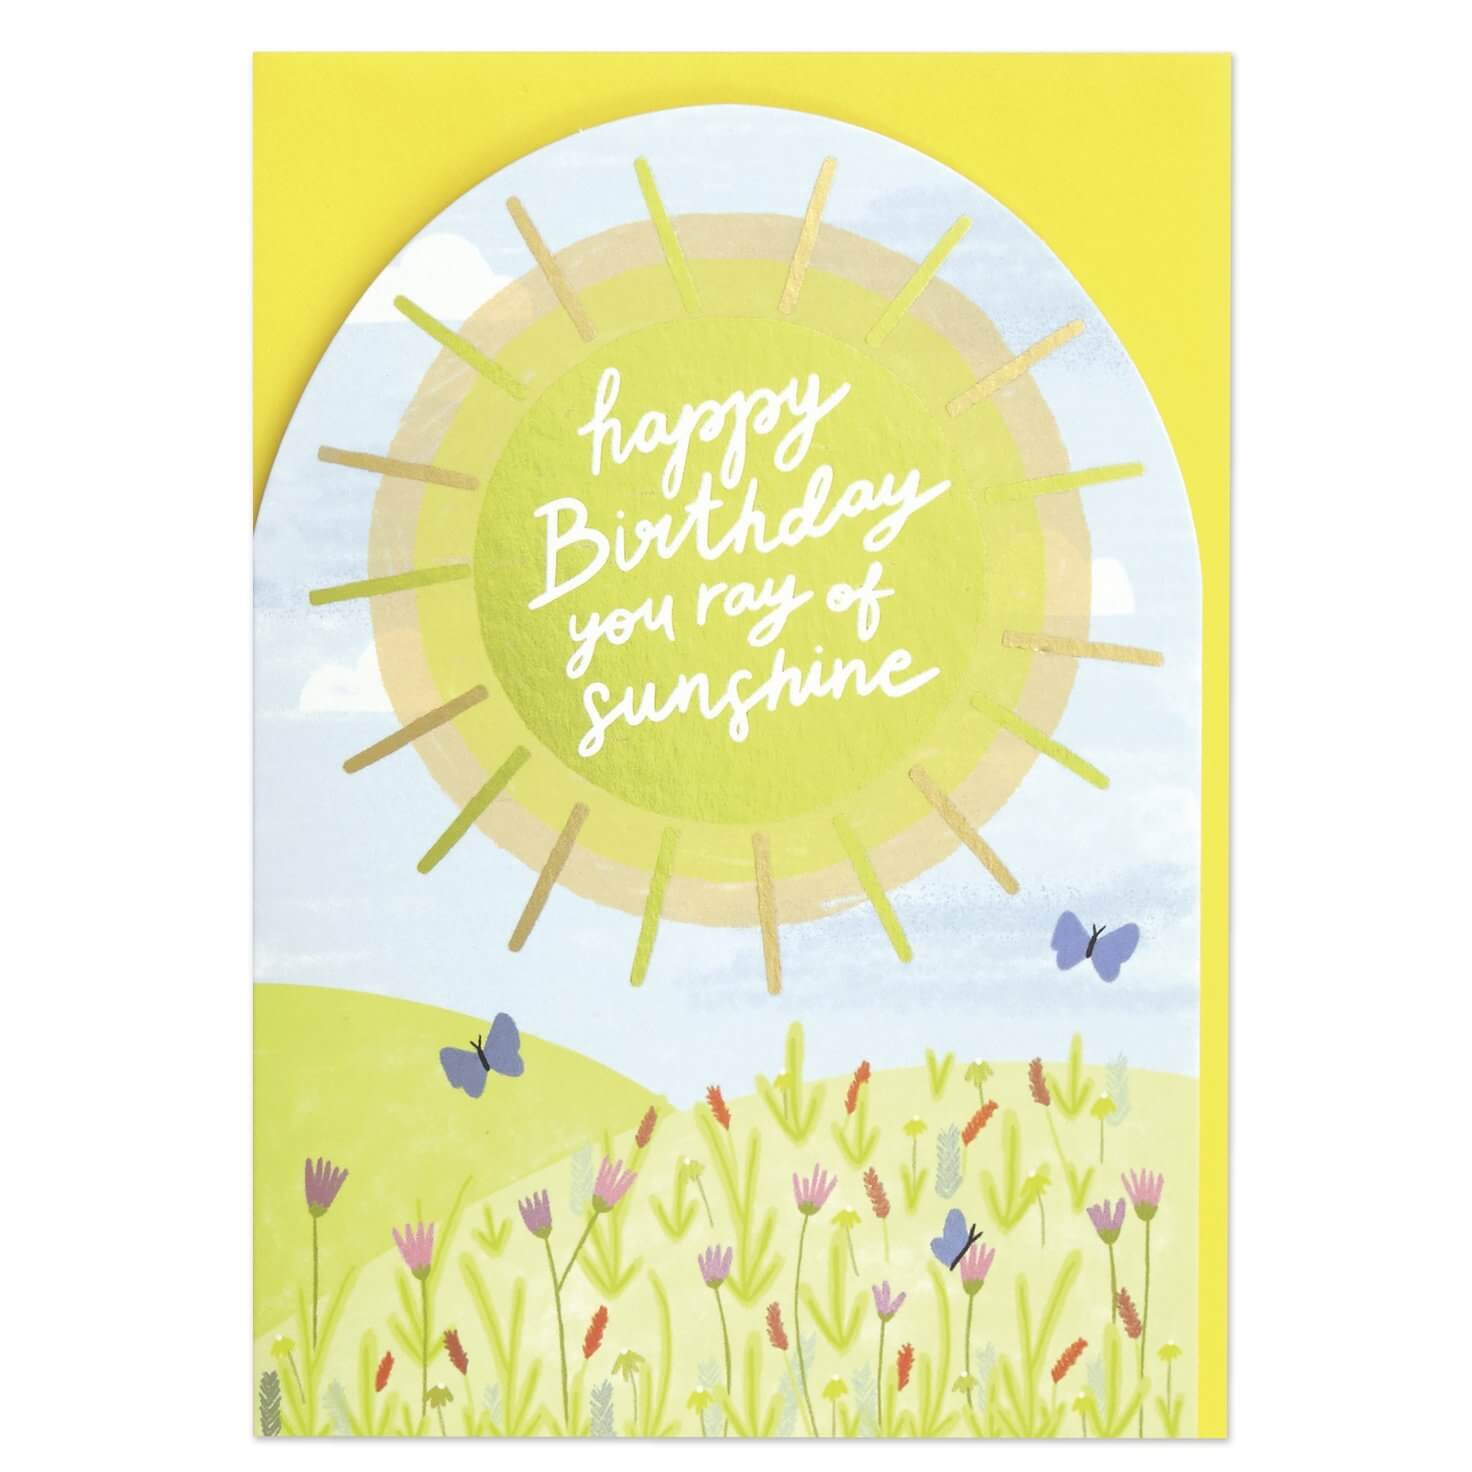 Happy Birthday Ray of Sunshine Card